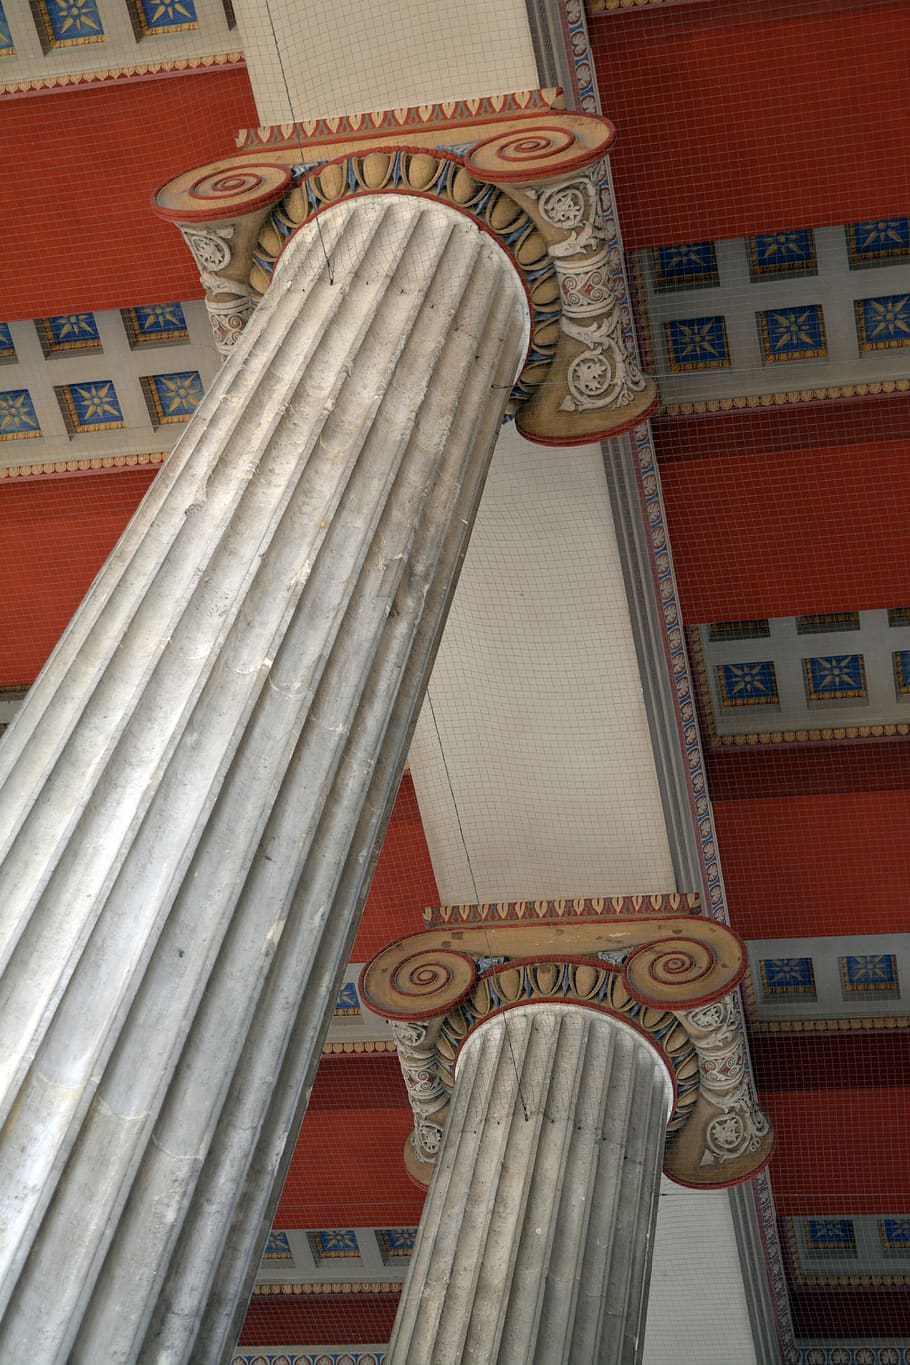 columns, design, ornate, angle, ceiling, room, elegant, decorative, support, column